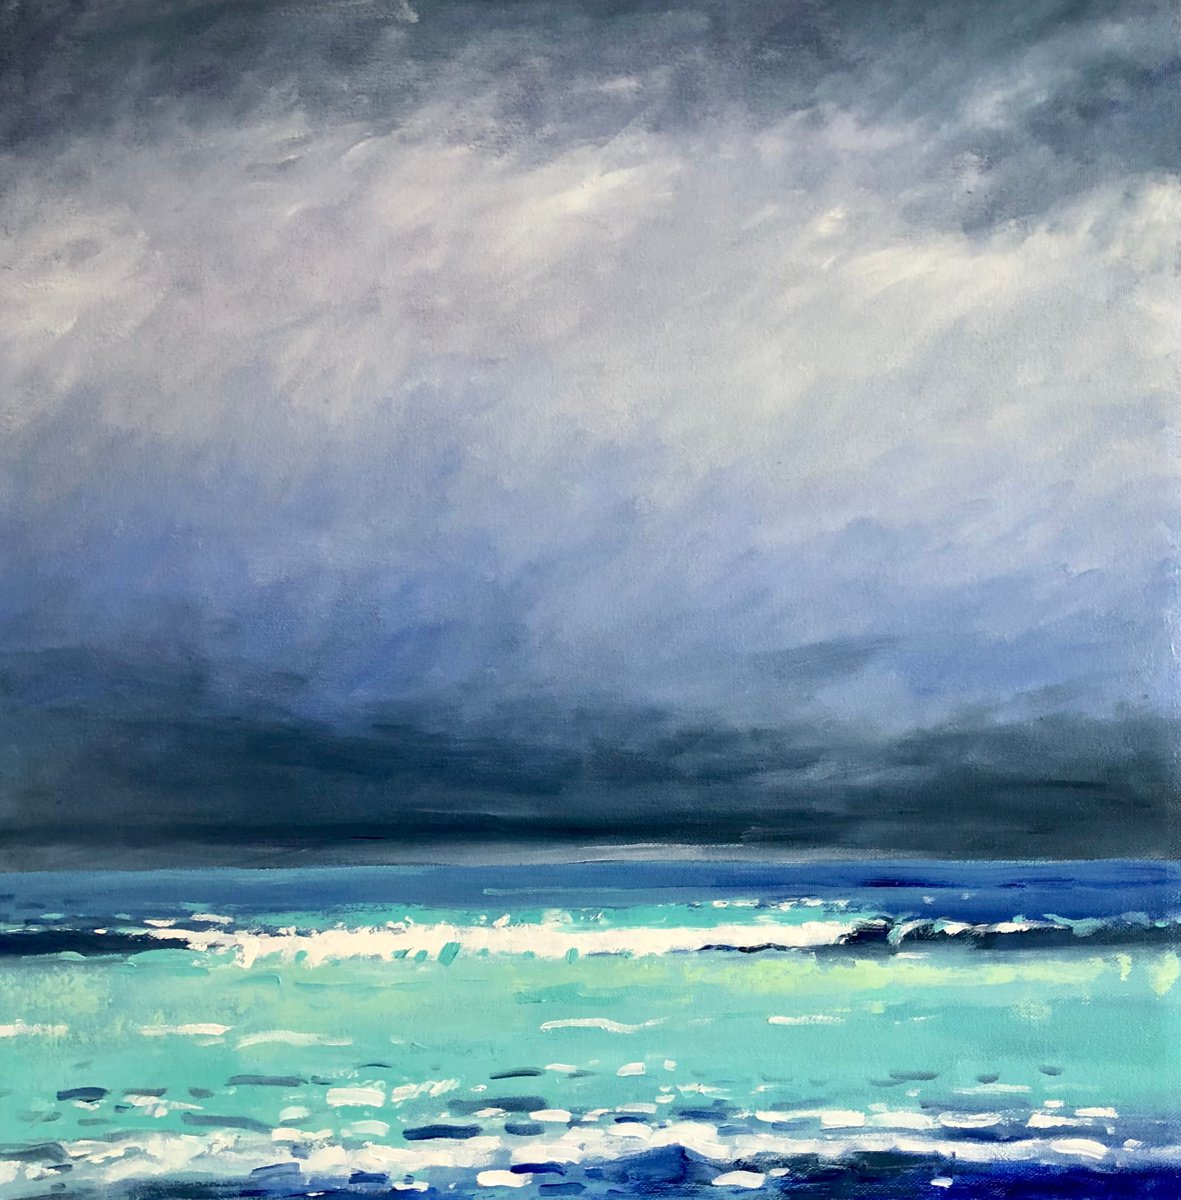 Ocean before the storm by Volodymyr Smoliak